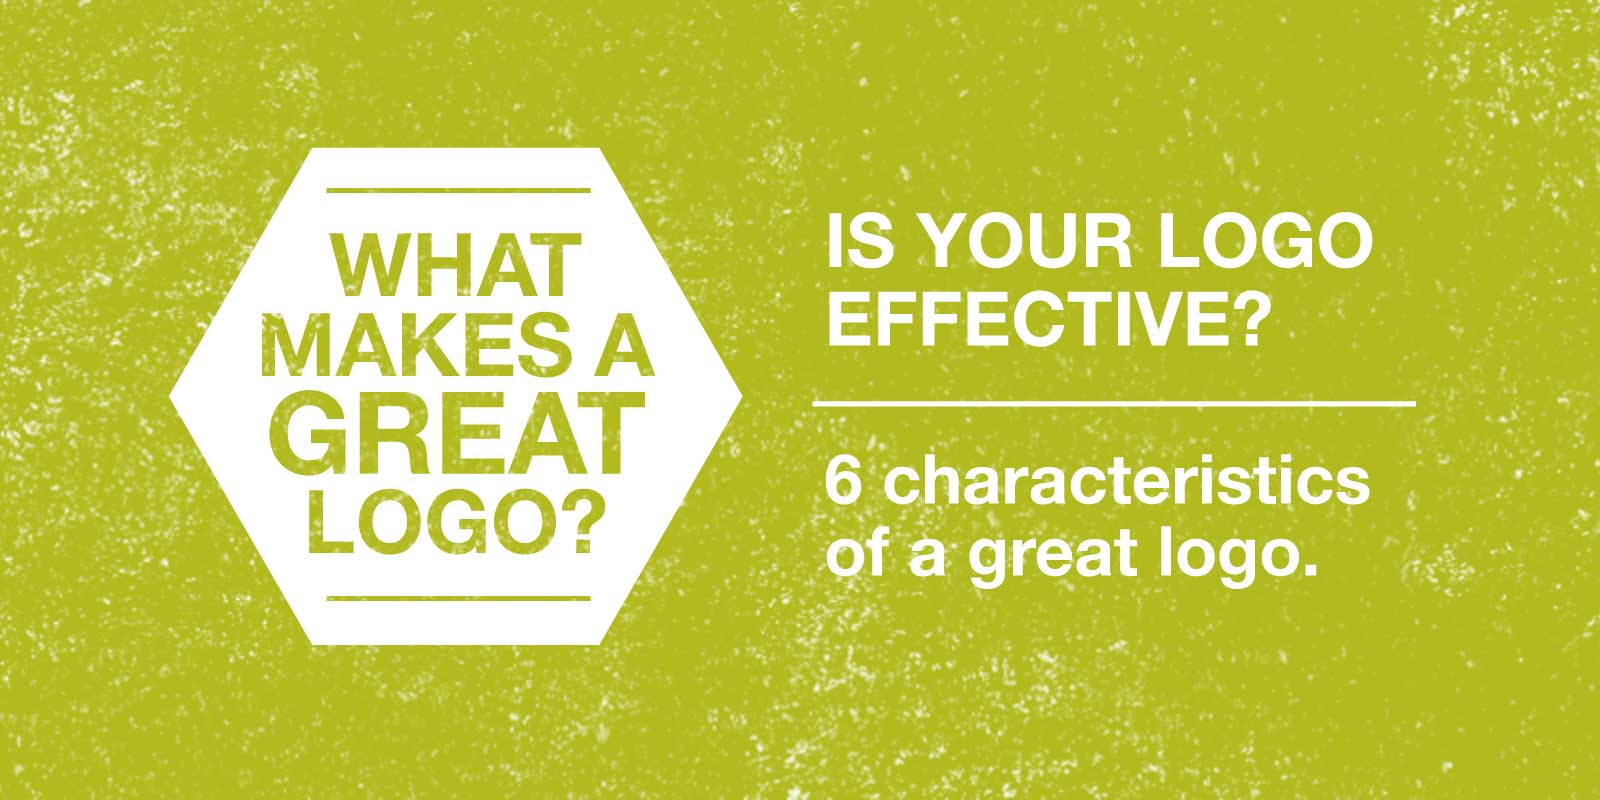 Grreat Logo - What Makes a Great Logo? – 6 Characteristics of an Effective Logo ...